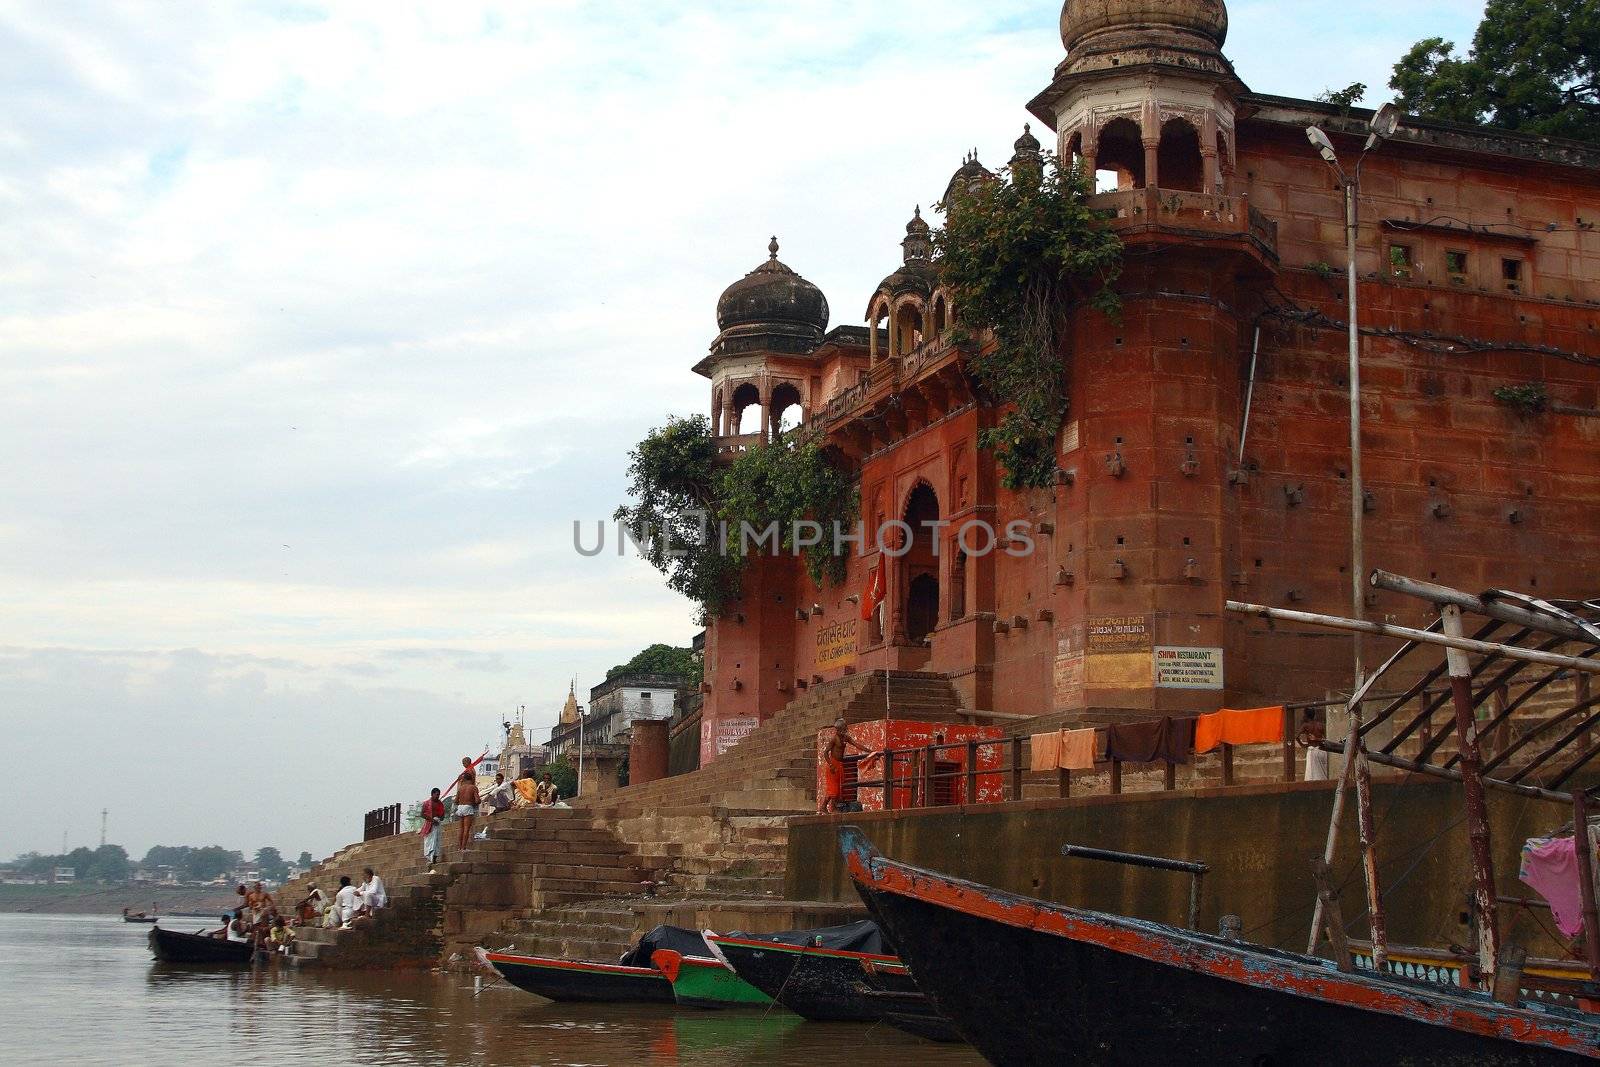 Ganga River - Varanasi - India / holy place for hindu people